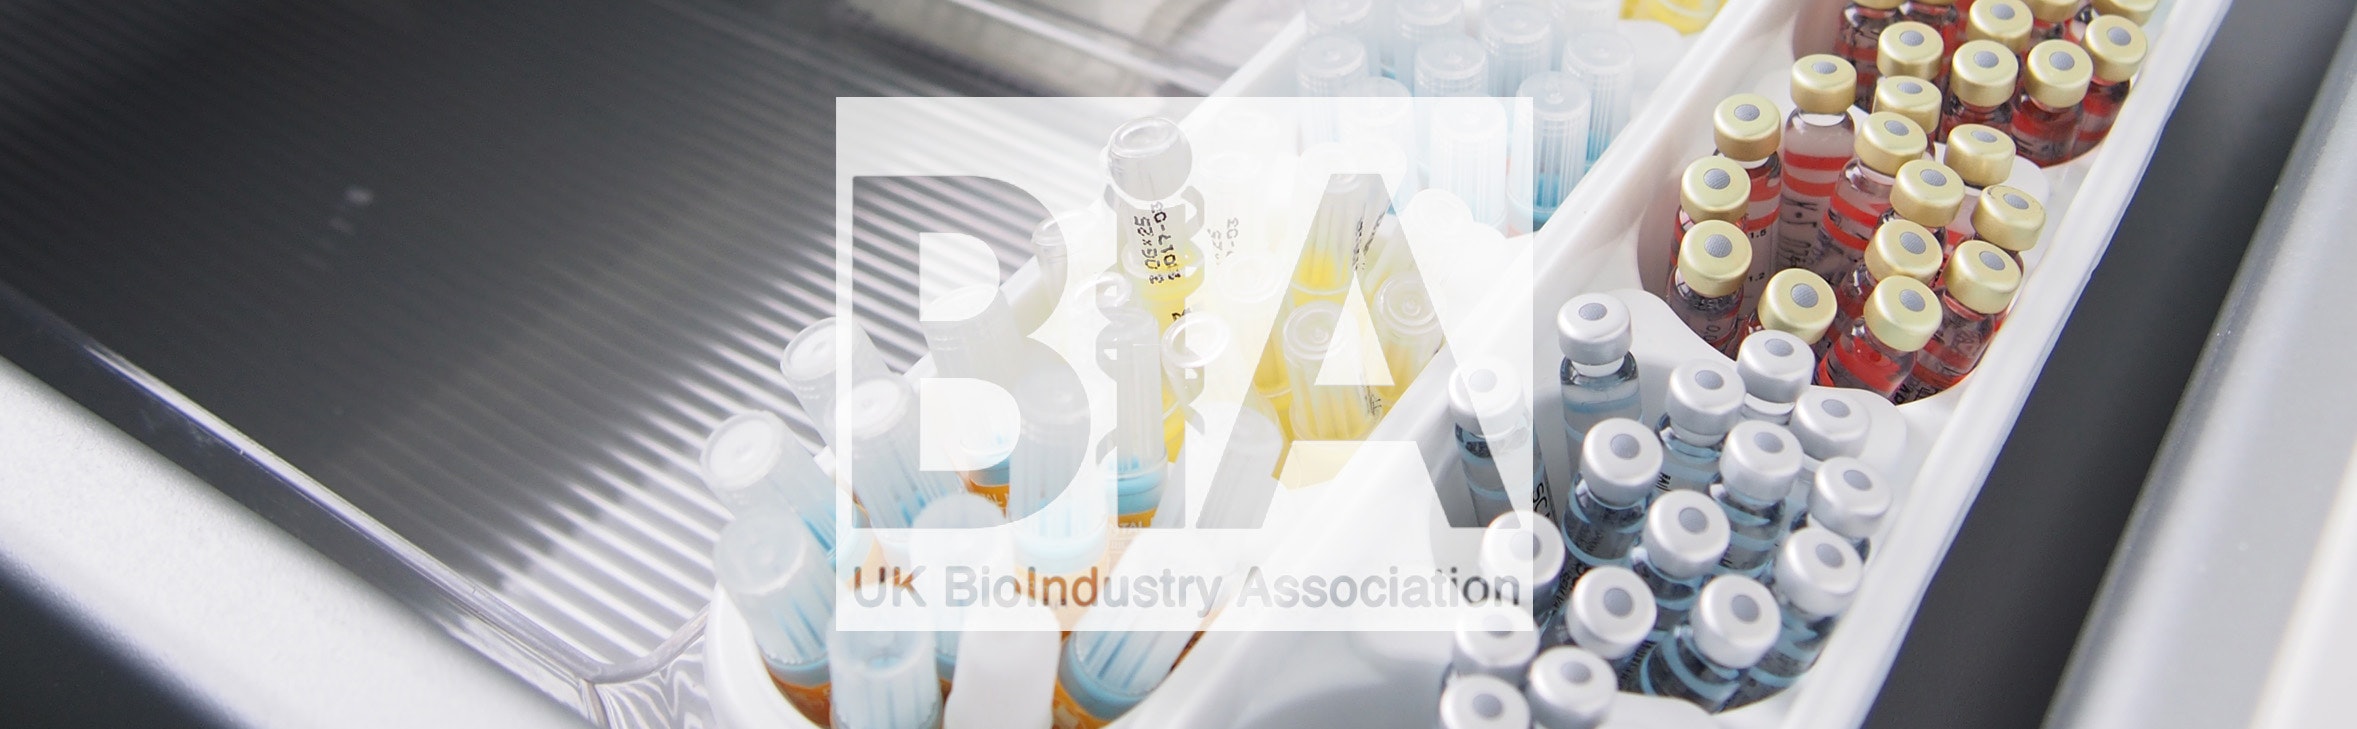 The Bioindustry Association